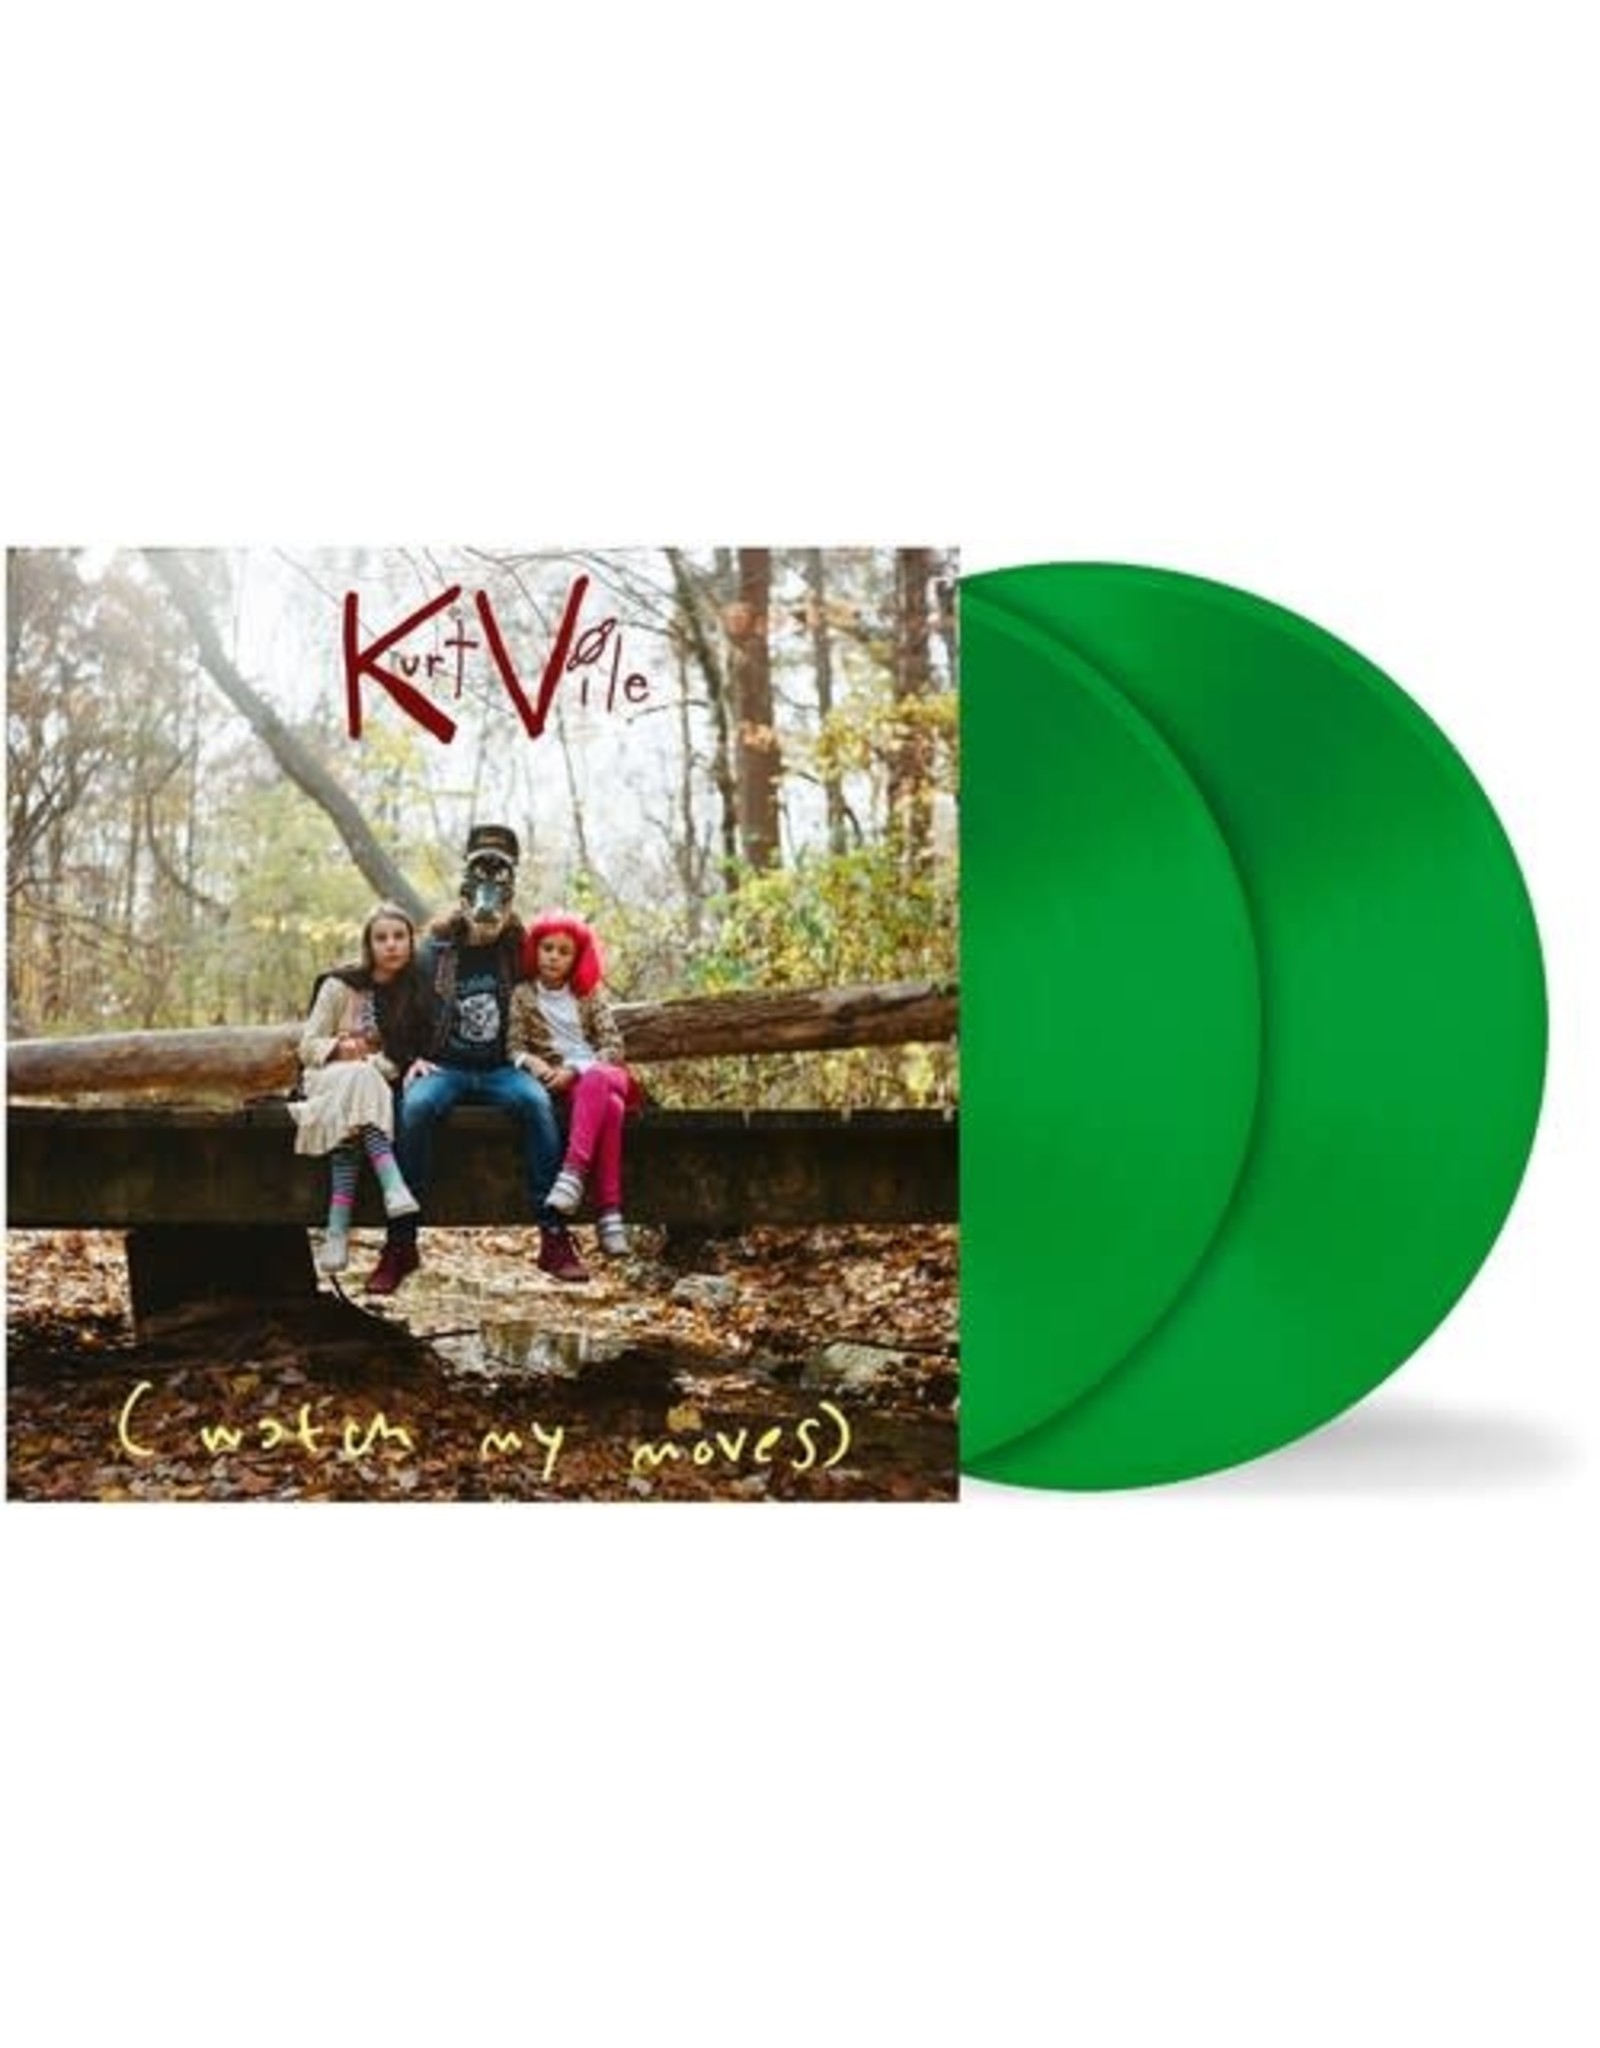 New Vinyl Kurt Vile - Watch My Moves (Clear/Green, IEX) 2LP